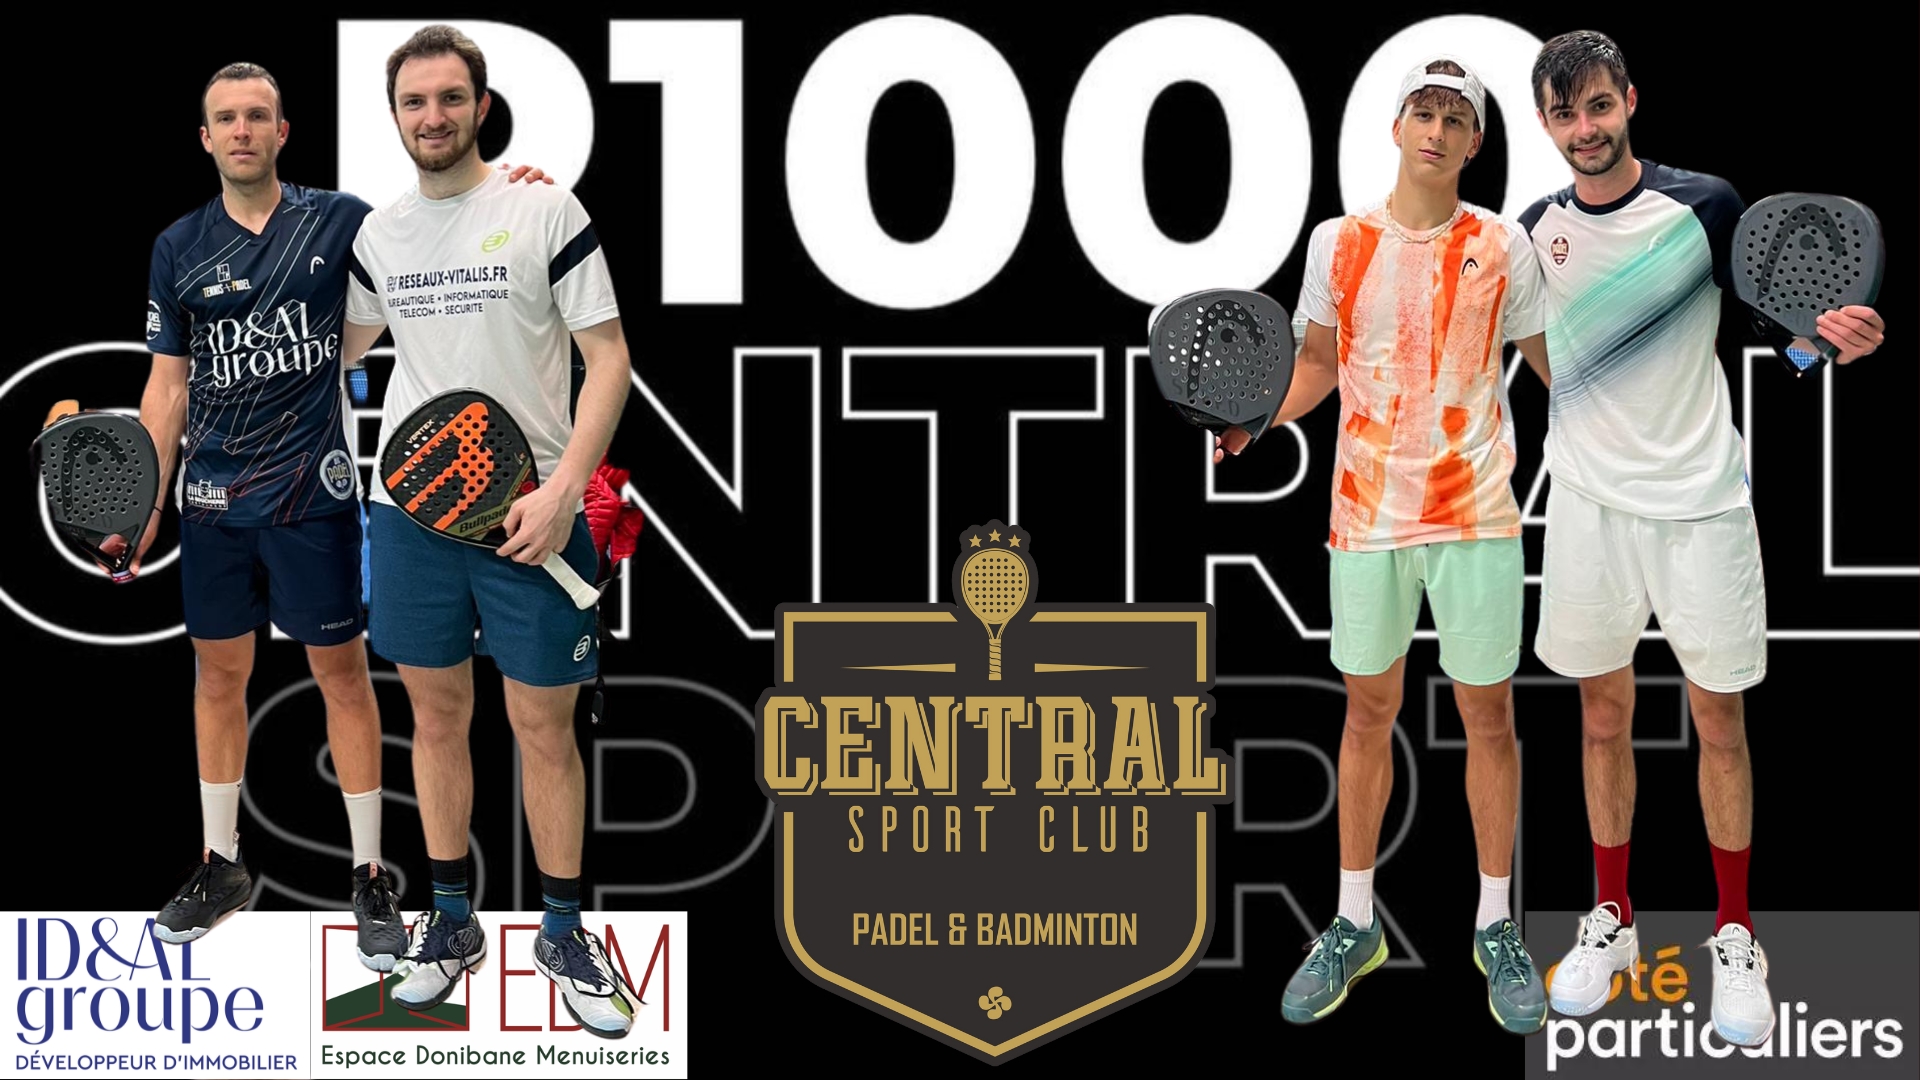 Final – P1000 Central Sport Club – Joris / Moura vs Grué / Raichman